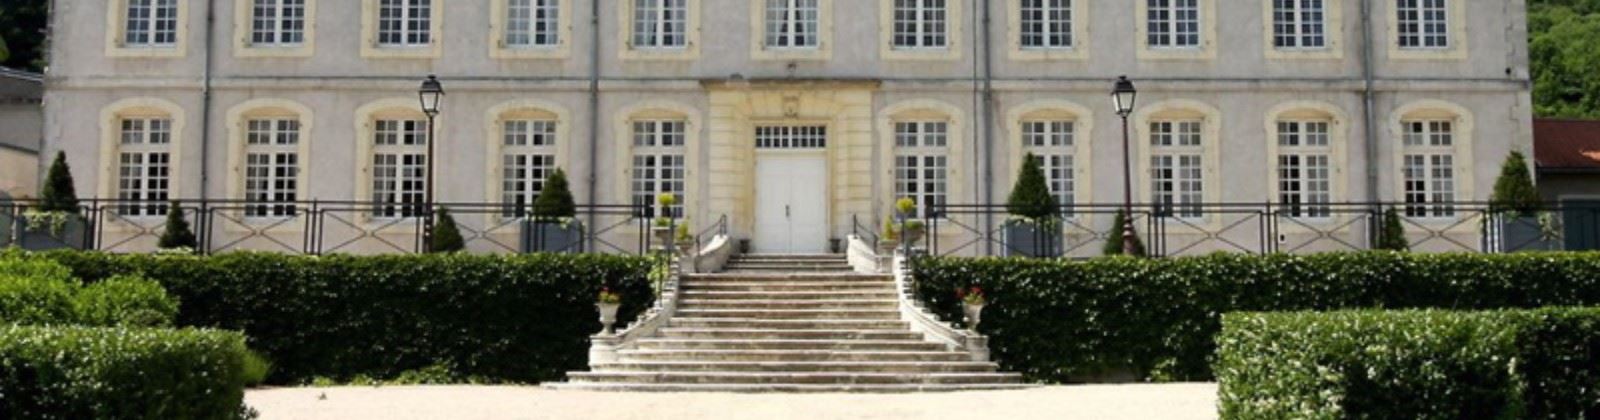 chateau vandeleville olevene hotel restaurant meeting booking 